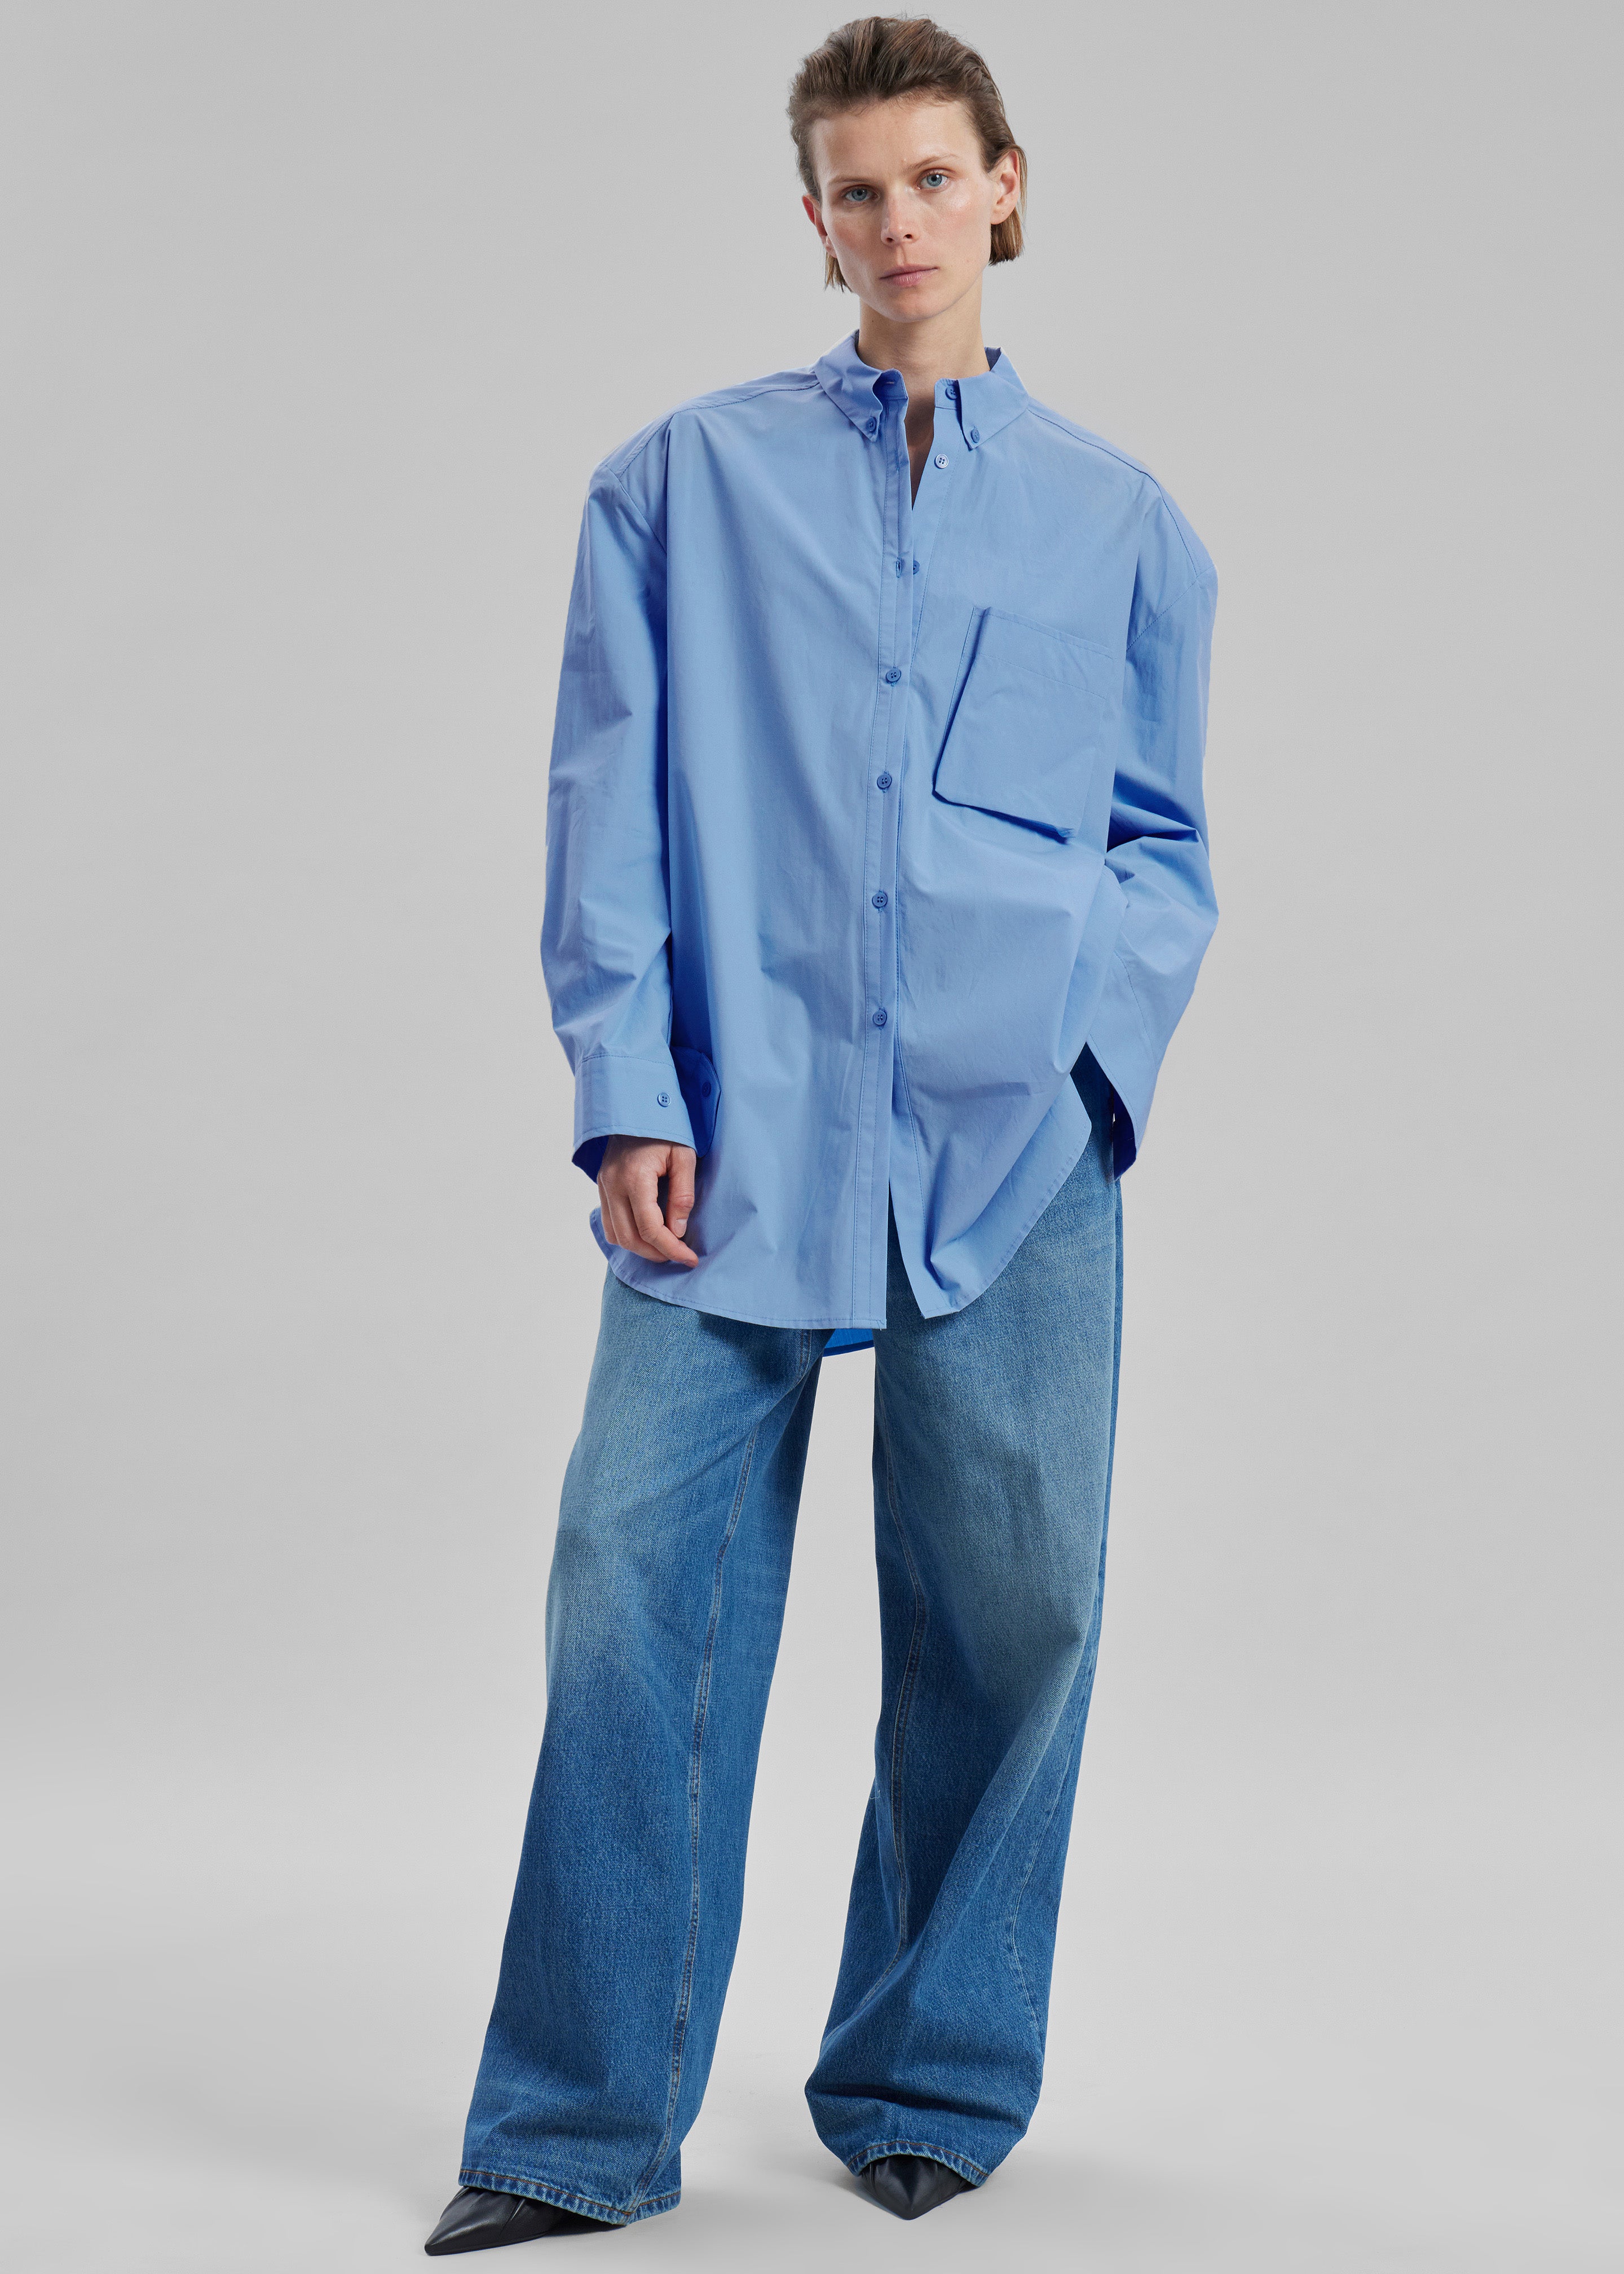 Brenna Padded Button Up Shirt - Blue - 4